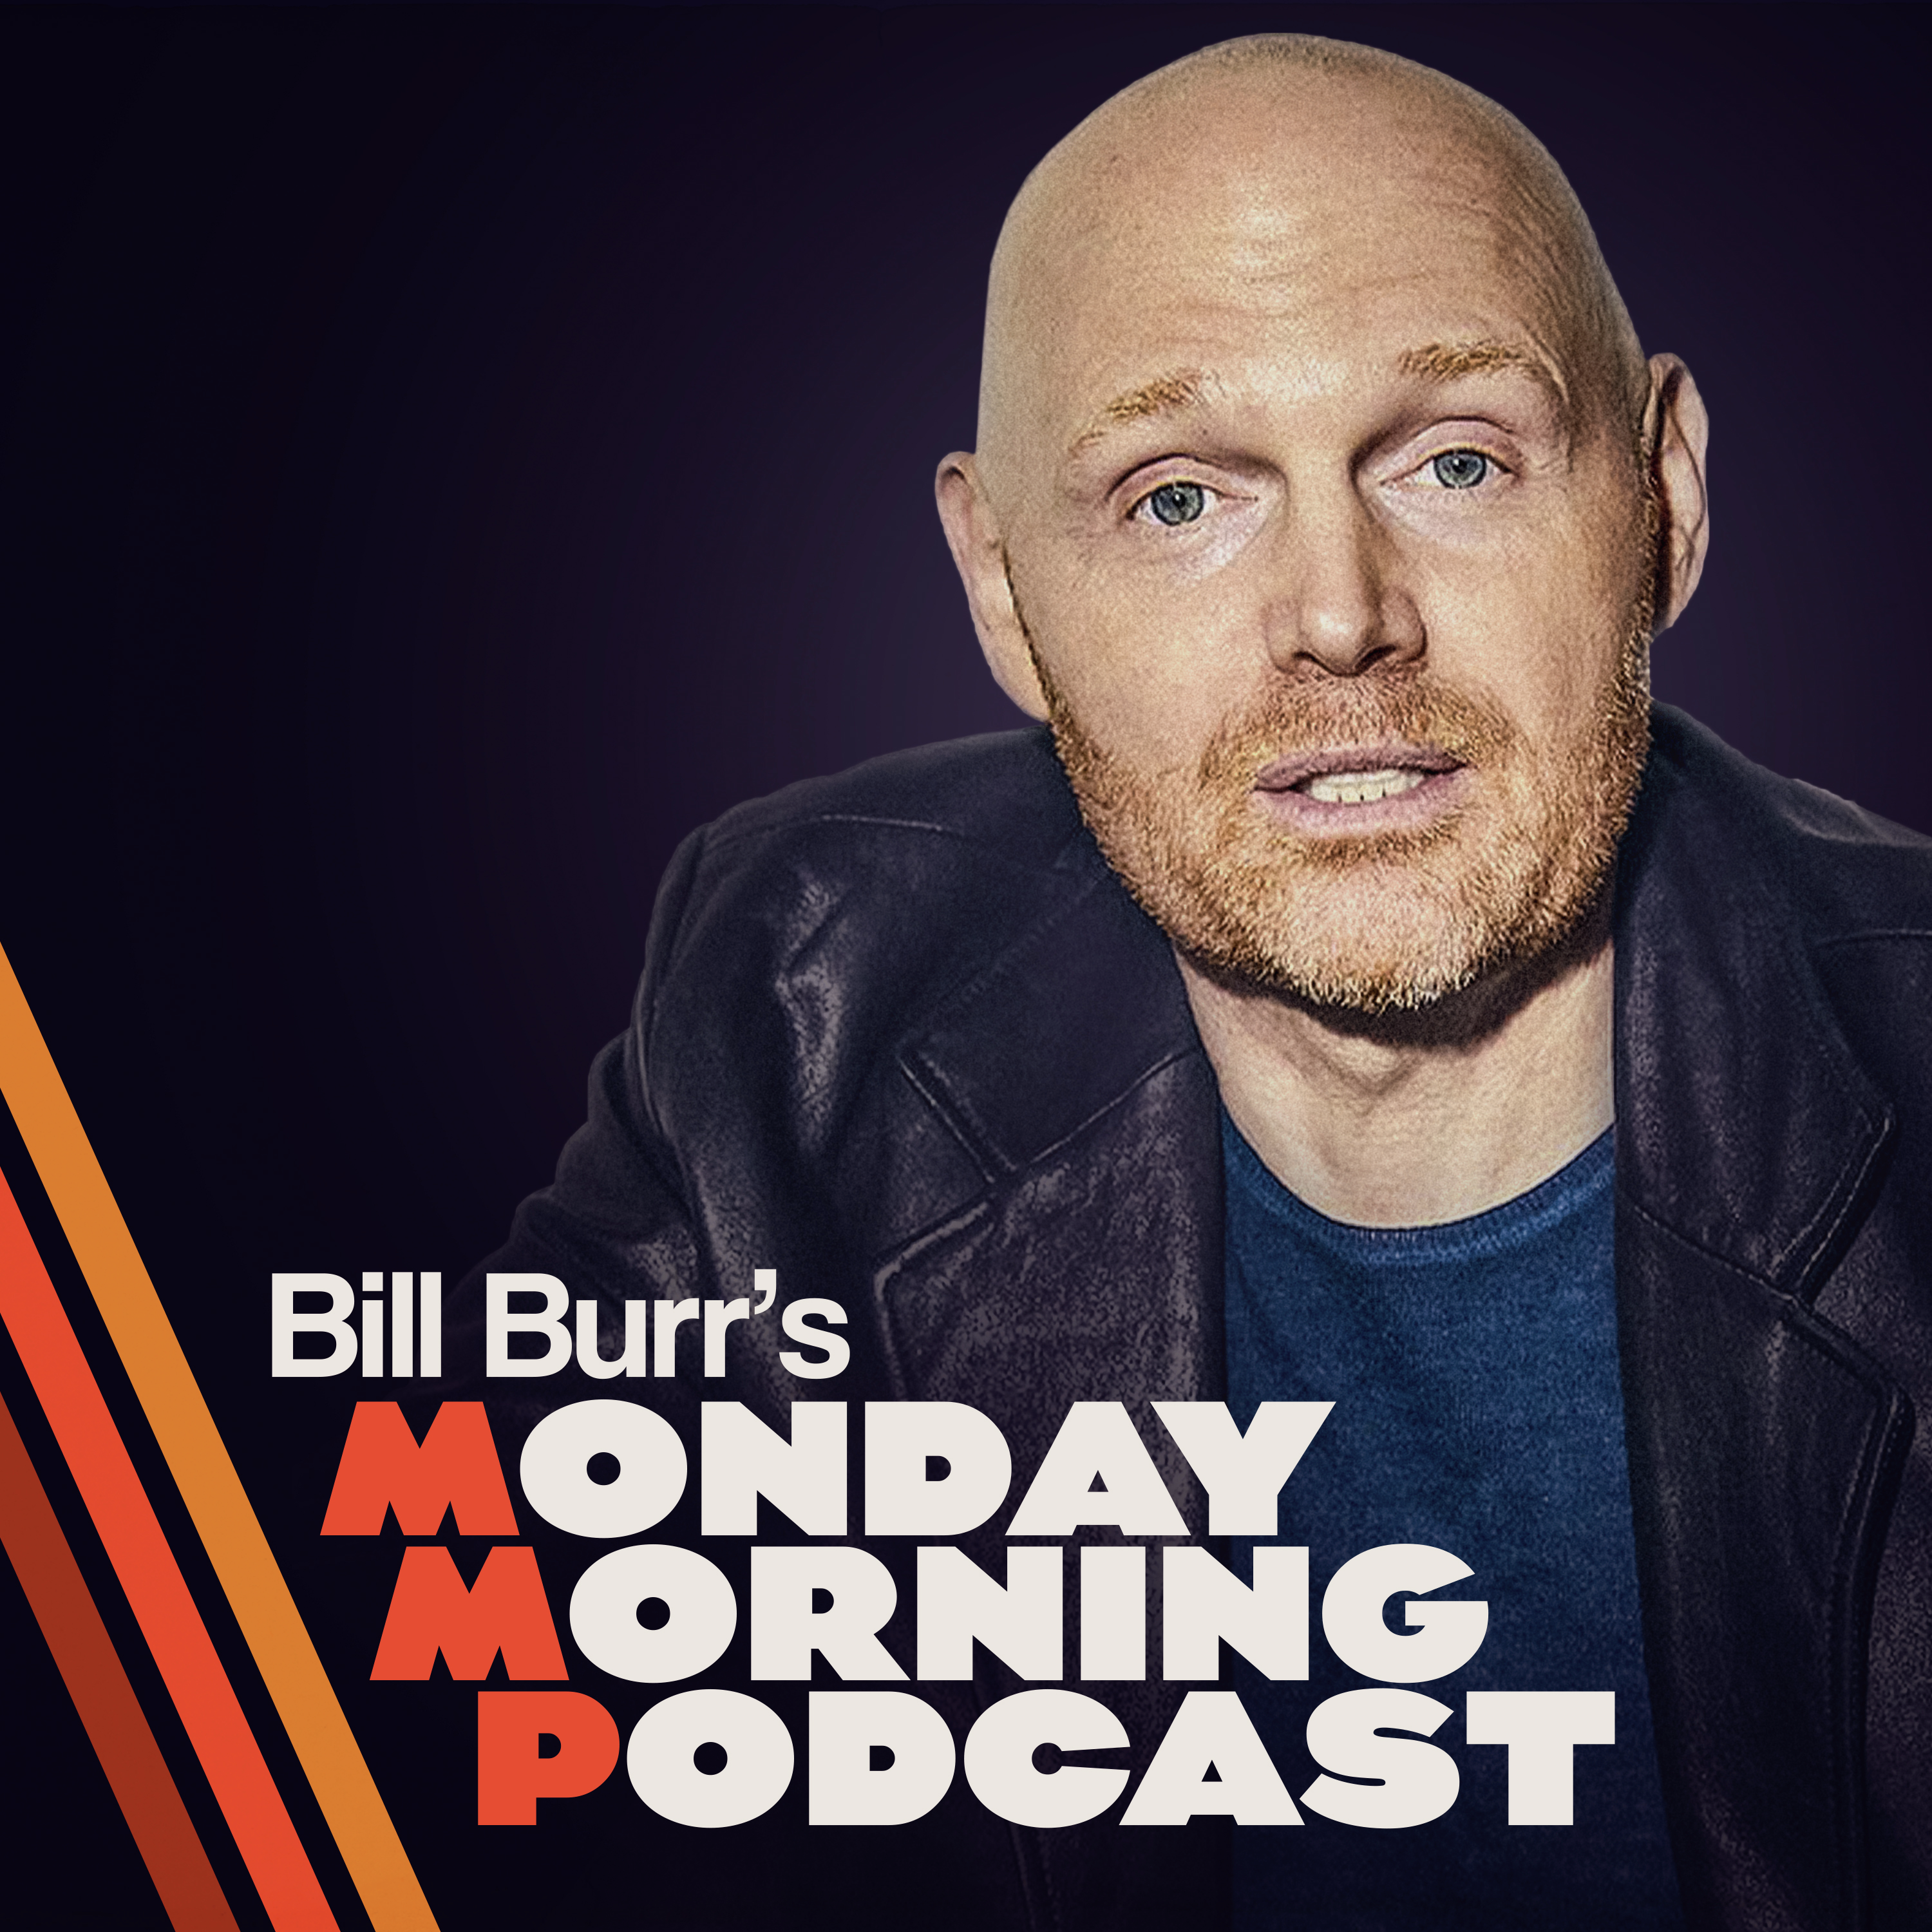 Monday Morning Podcast podcast show image